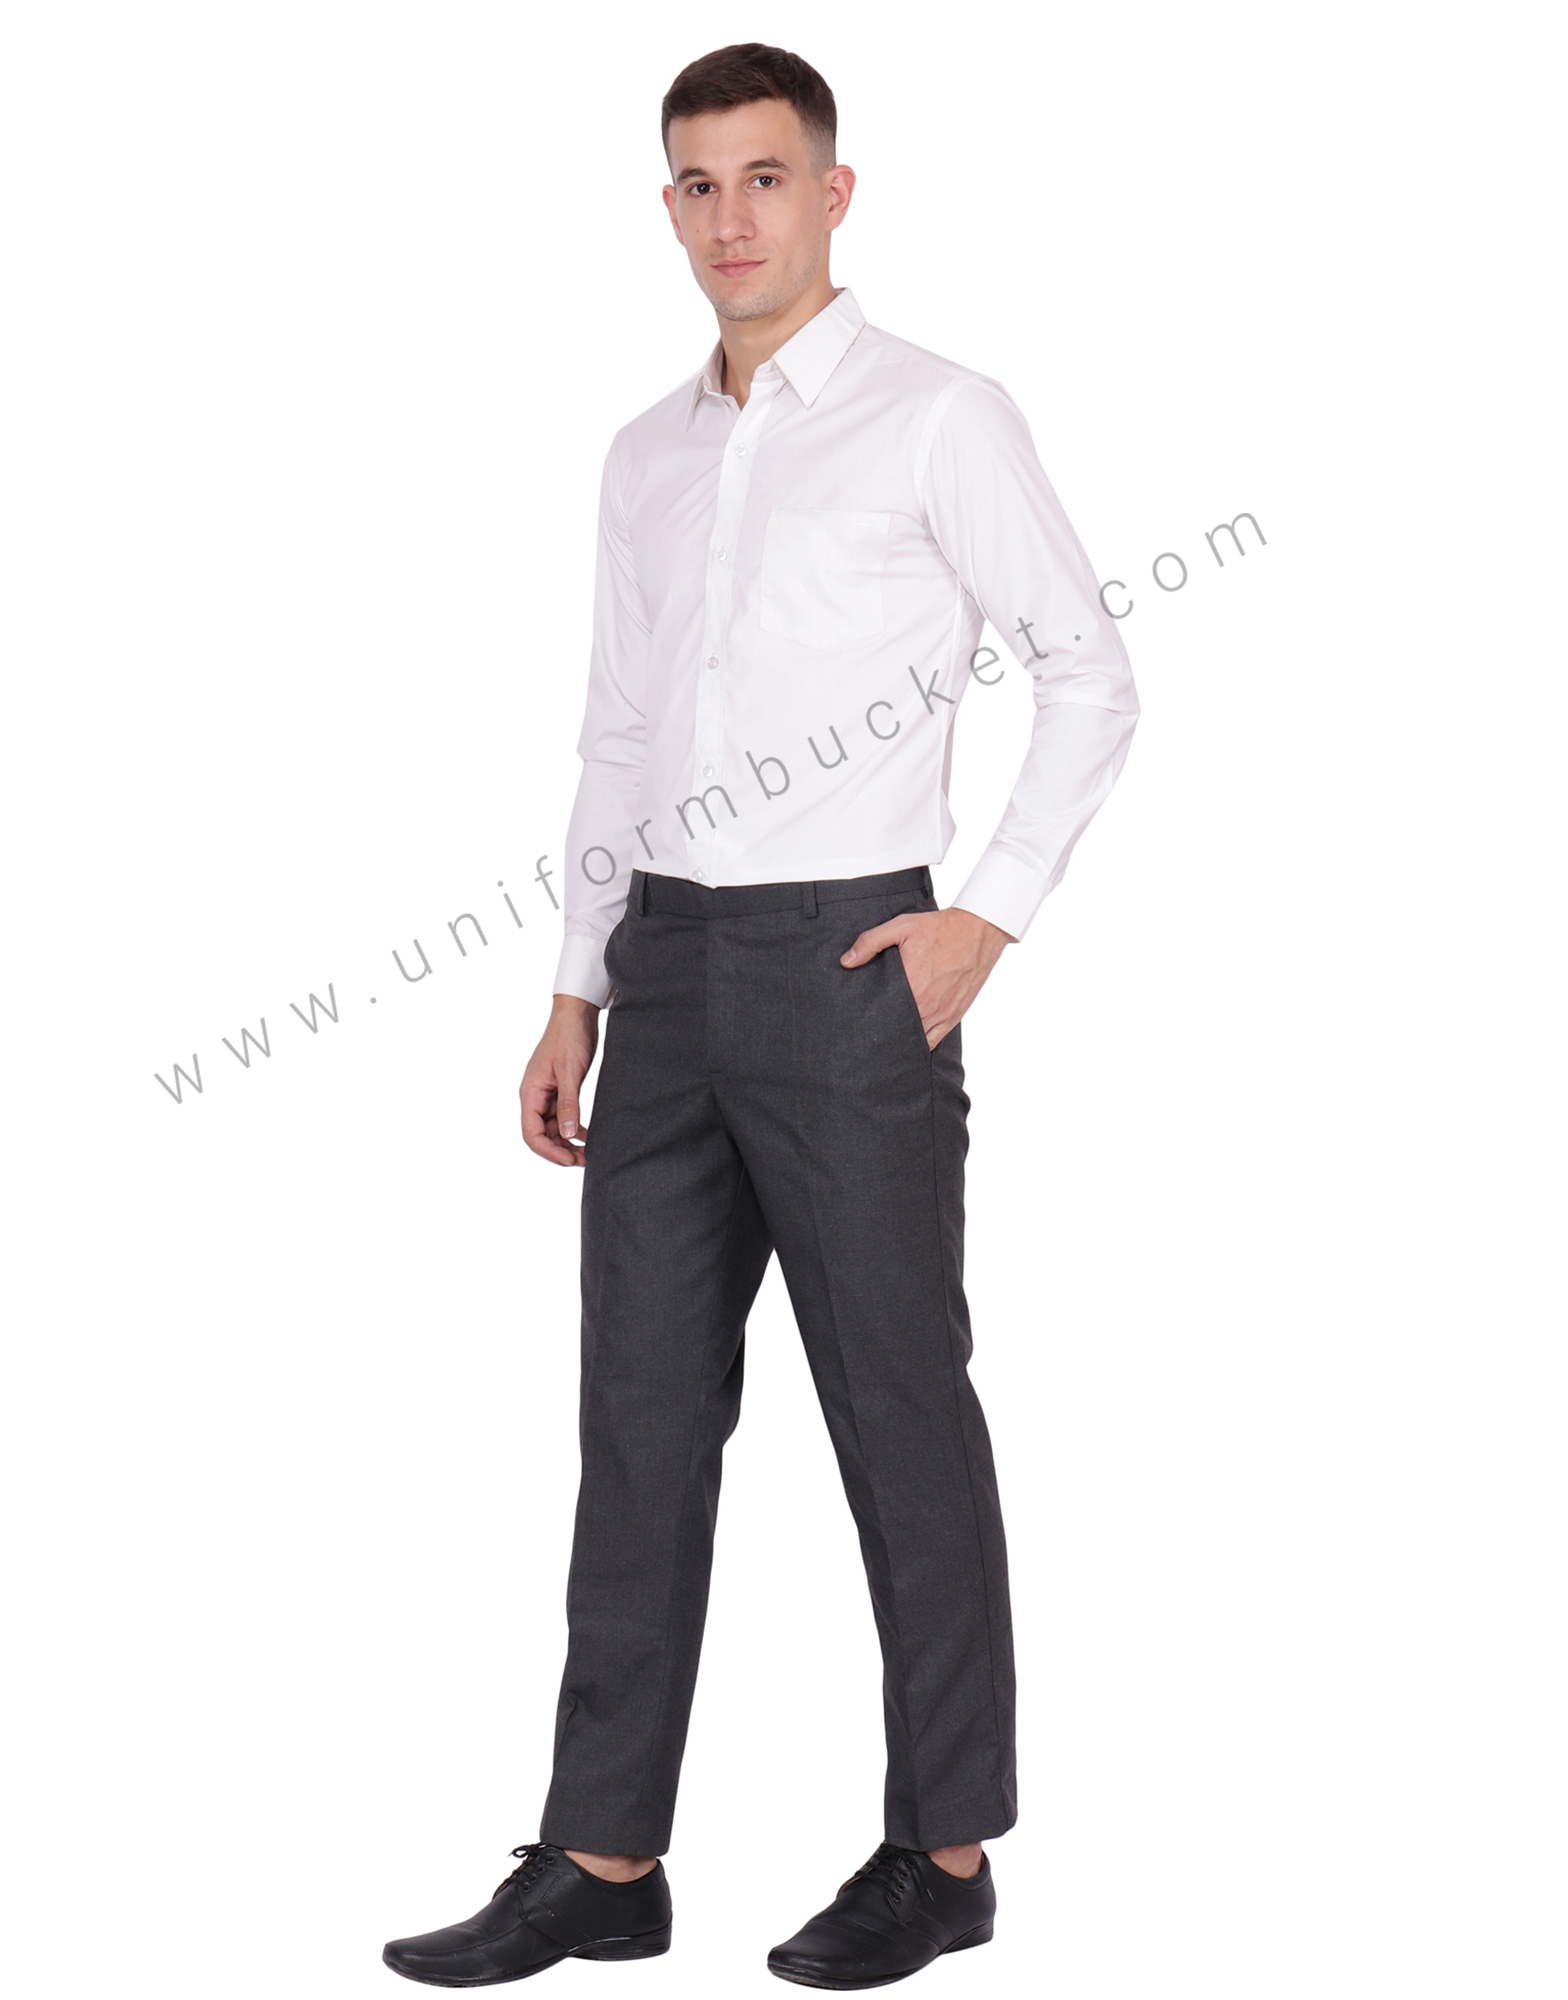 Charcoal Gray Dress Pants for Men | Concitor Grey Pant